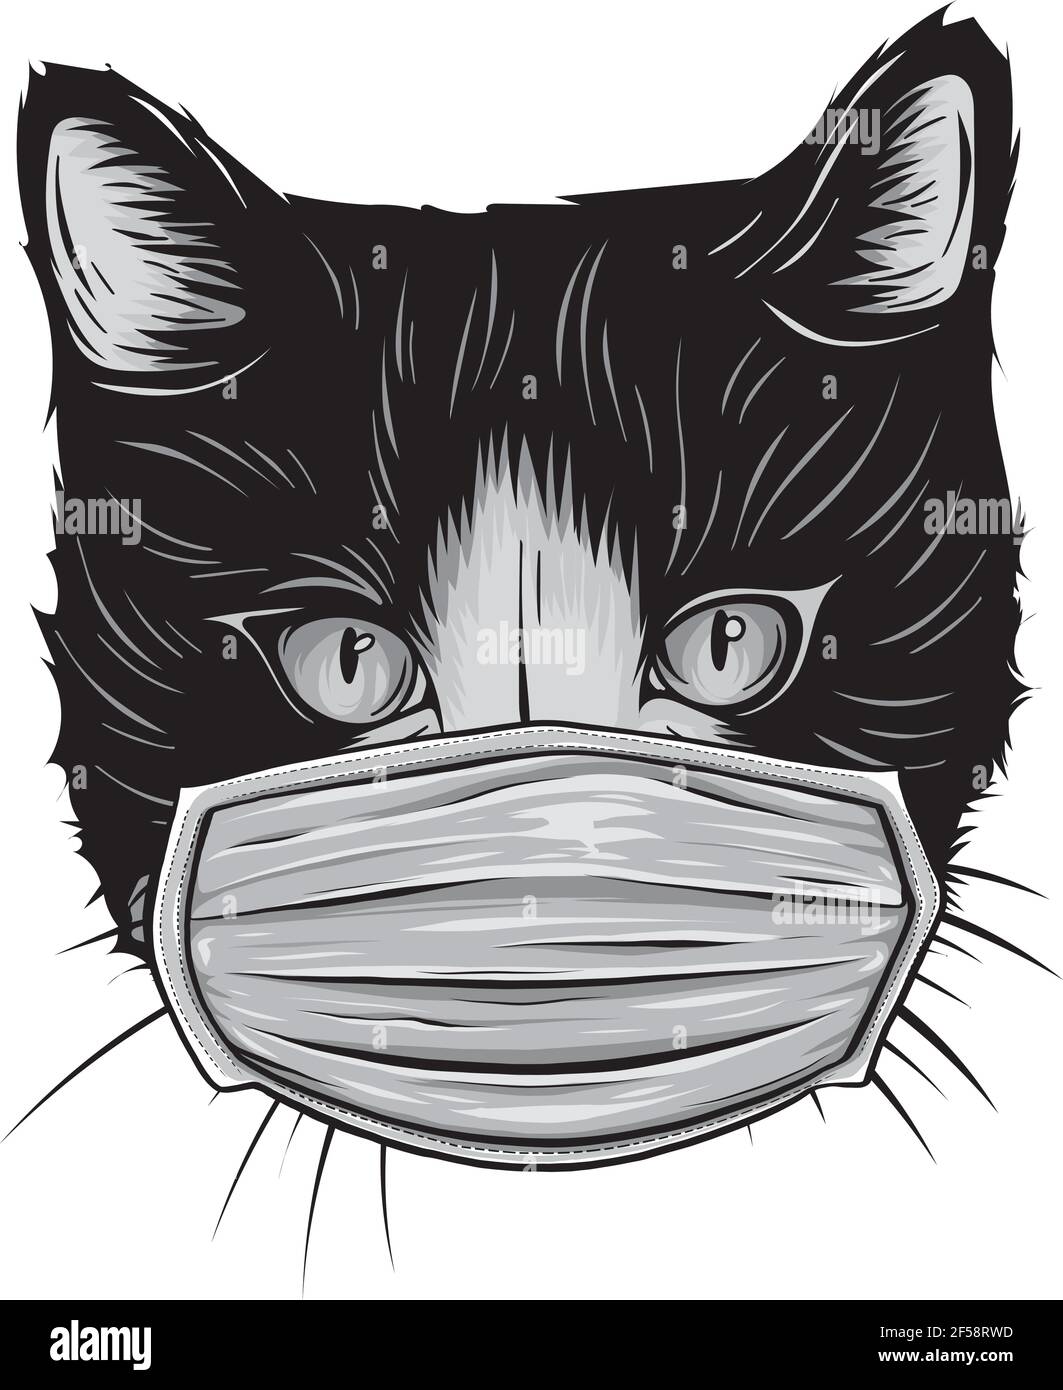 Cat Mask Logo of Animal Face Clipart Stock Vector - Illustration